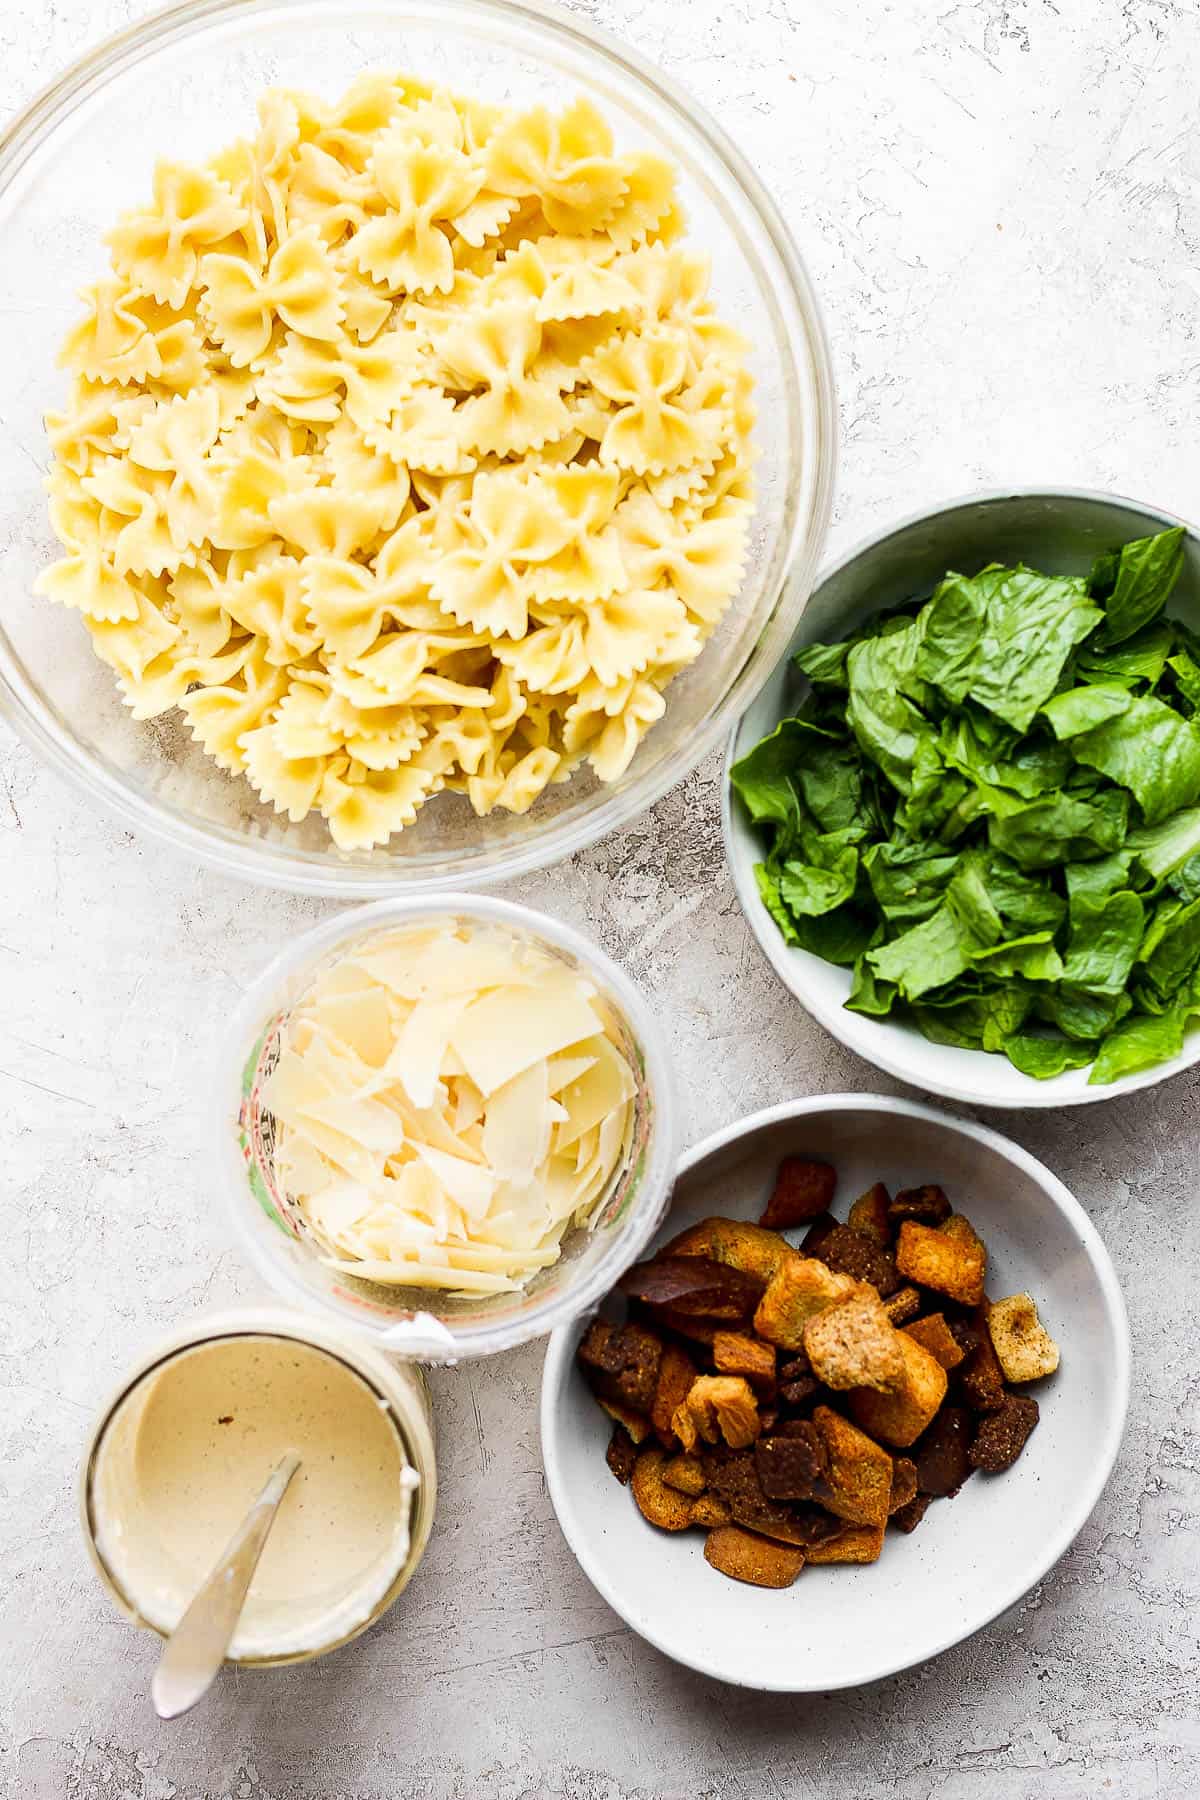 Ingredients for caesar pasta salad in separate bowls.